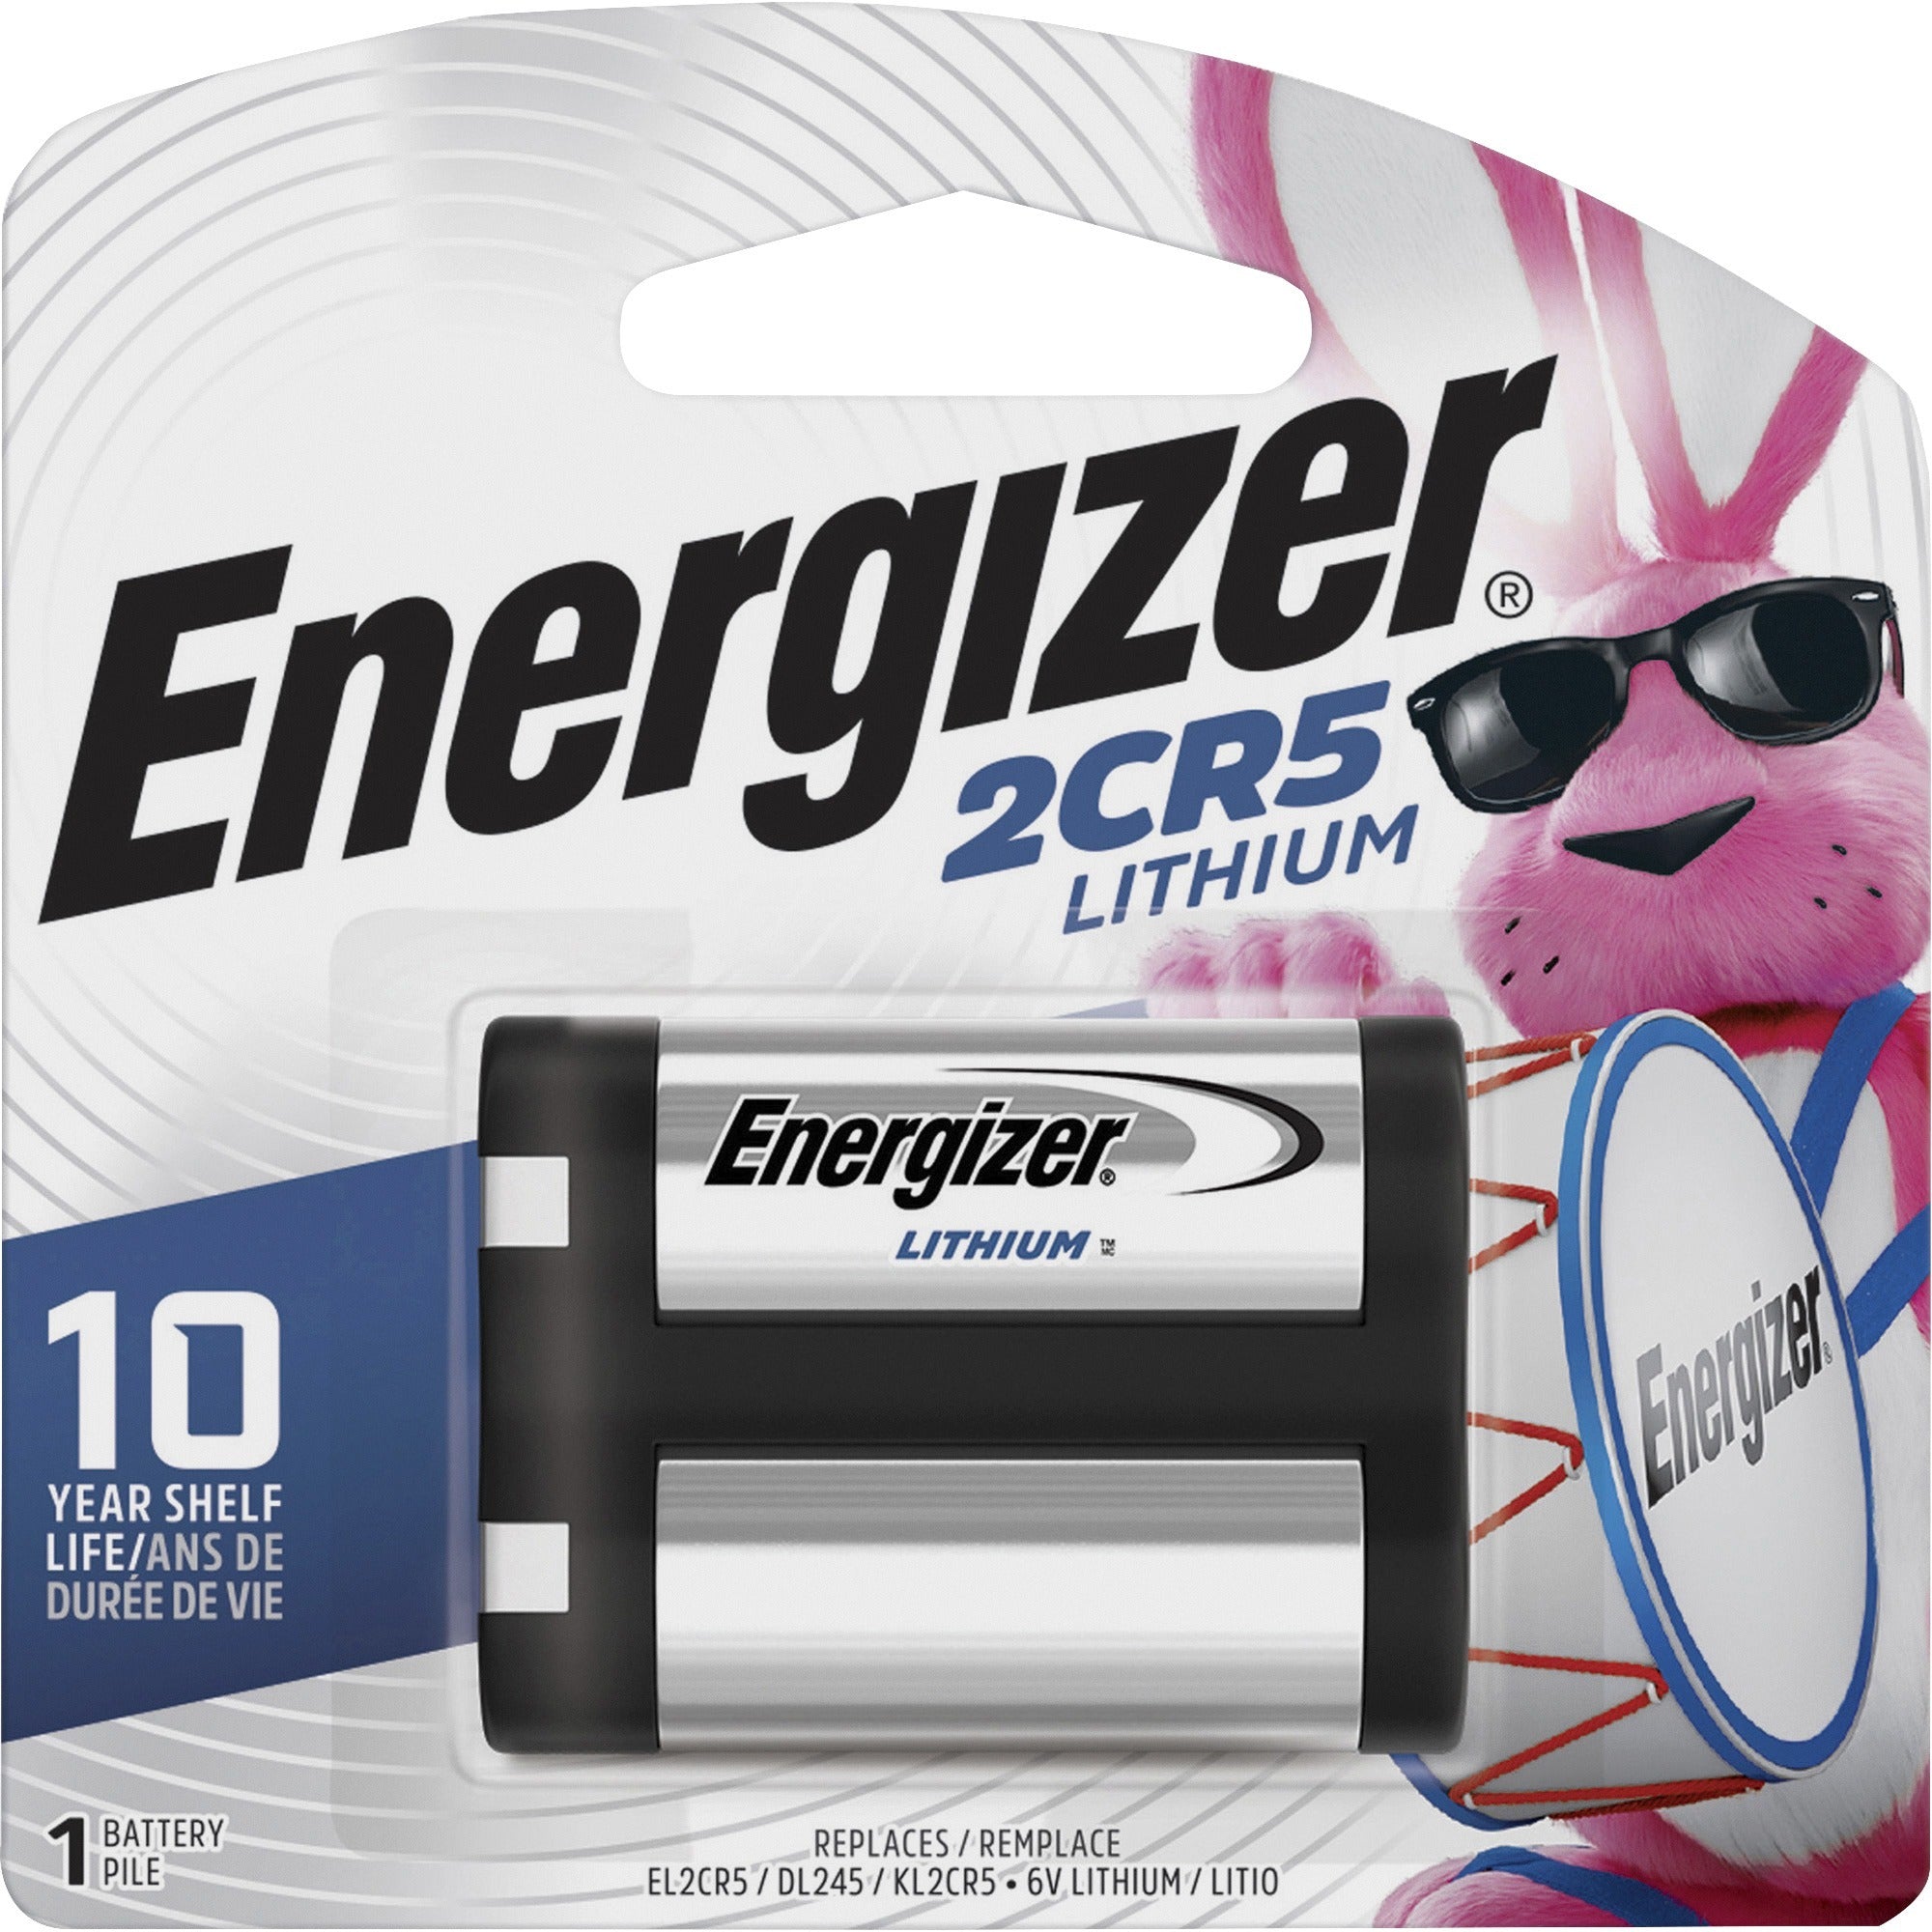 Energizer 2CR5 Batteries, 1 Pack - For Camera - 6 V DC - 1300 mAh - Lithium (Li) - 1 / Pack - 